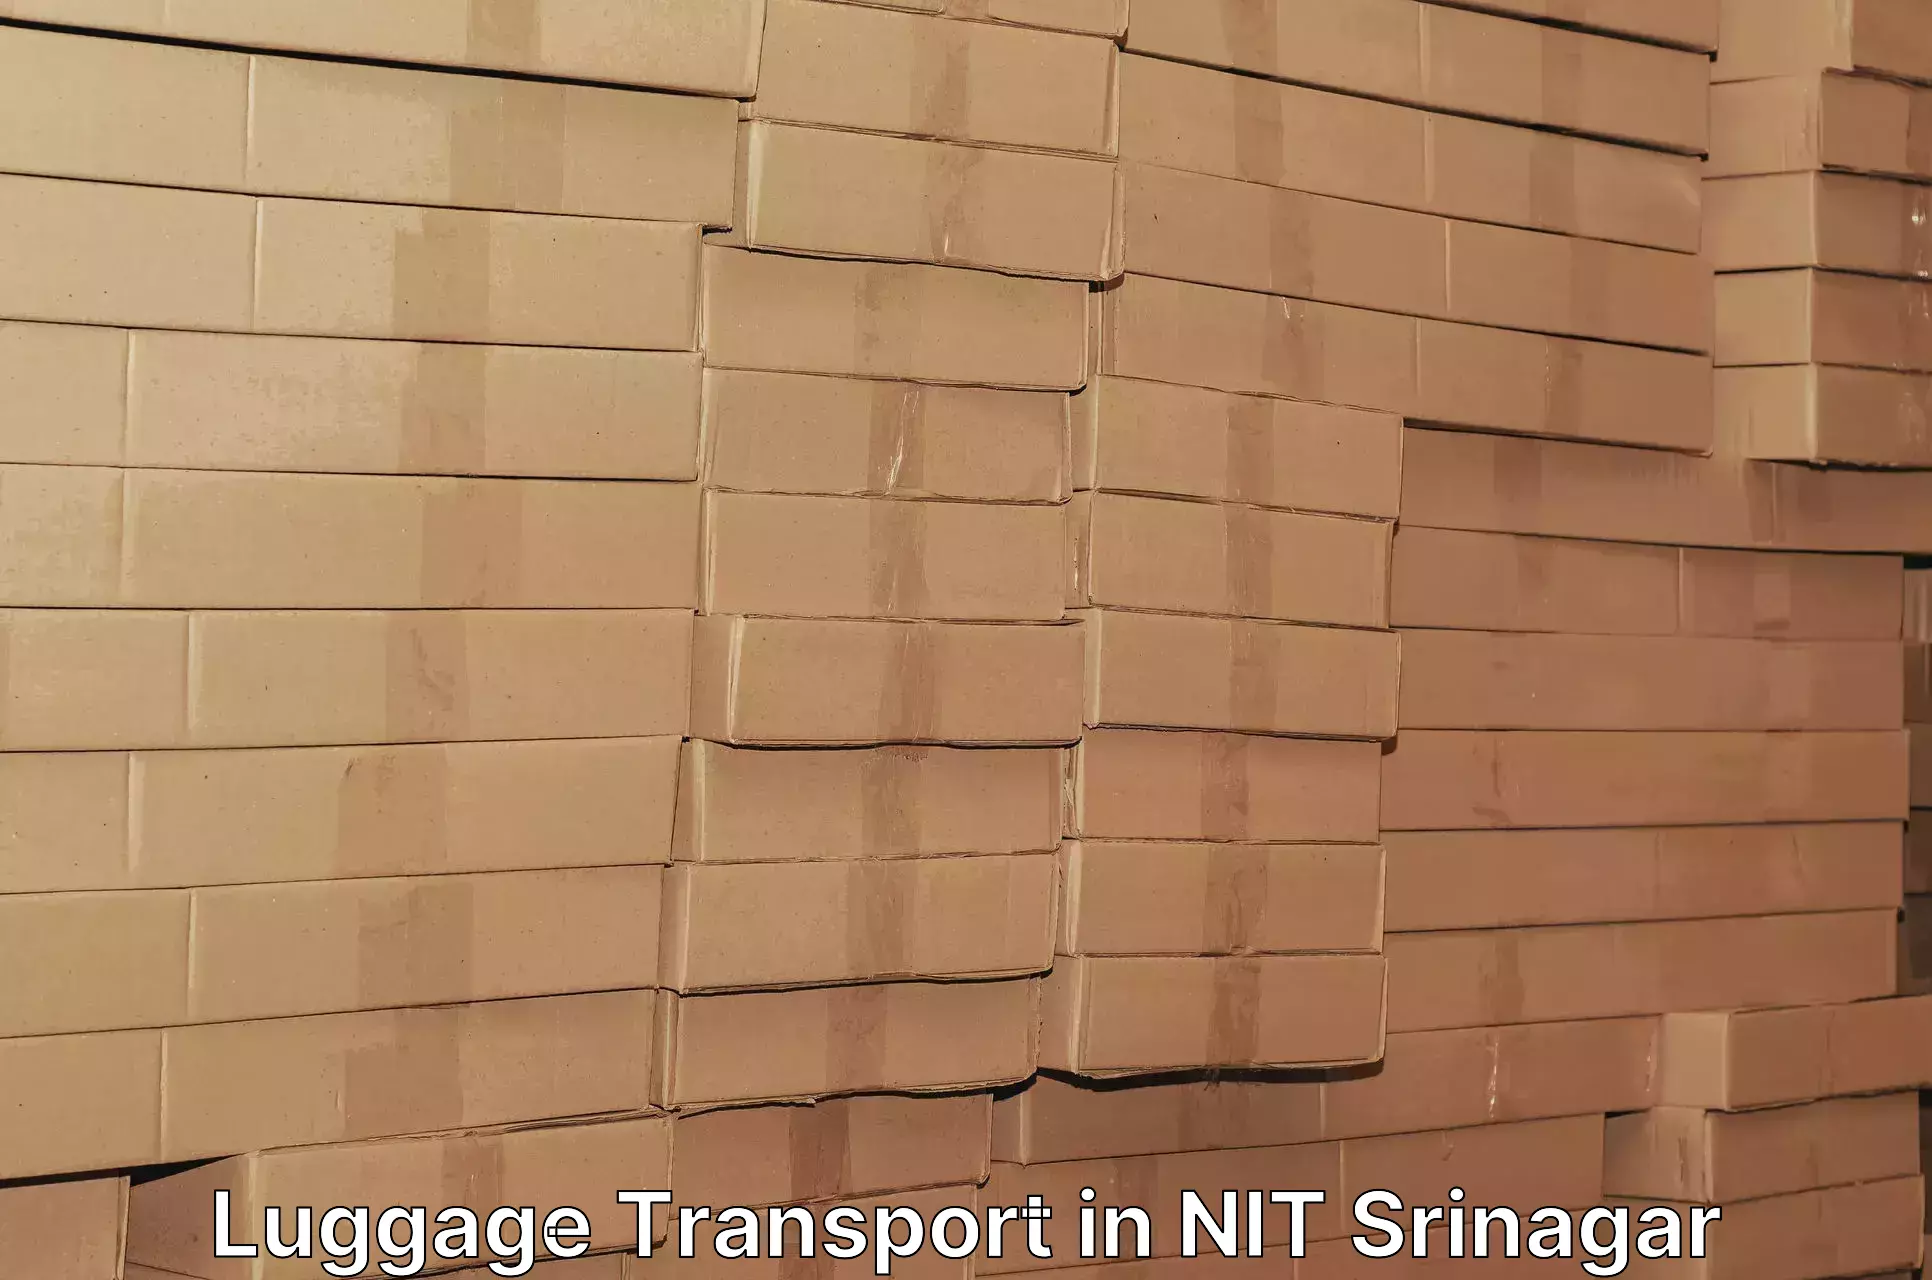 Baggage transport services in NIT Srinagar